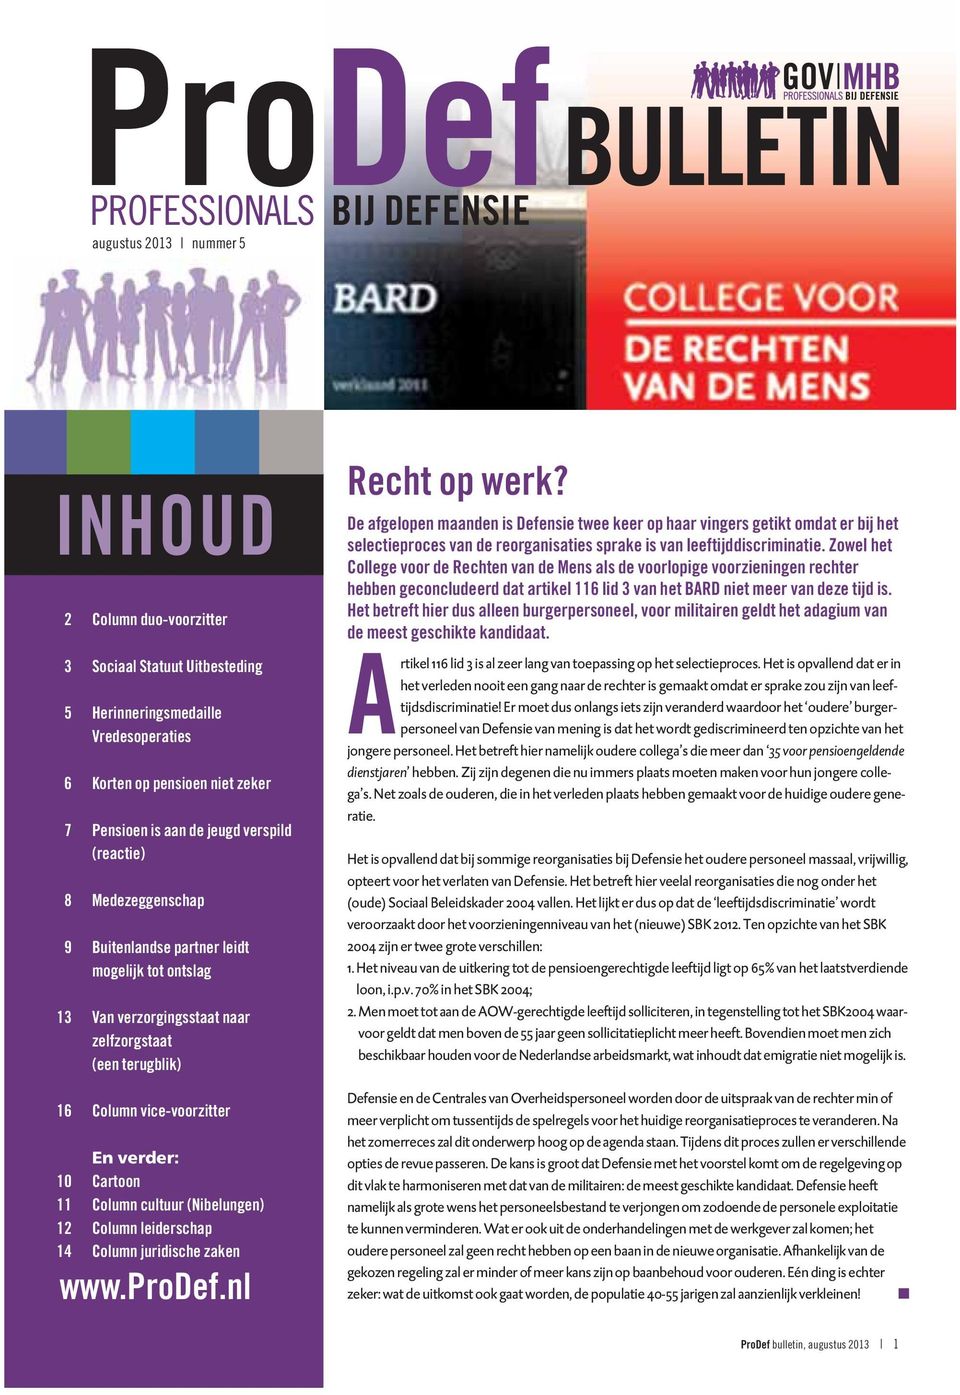 vice-voorzitter En verder: Cartoon Column cultuur (Nibelungen) Column leiderschap Column juridische zaken www.prodef.nl Recht op werk?